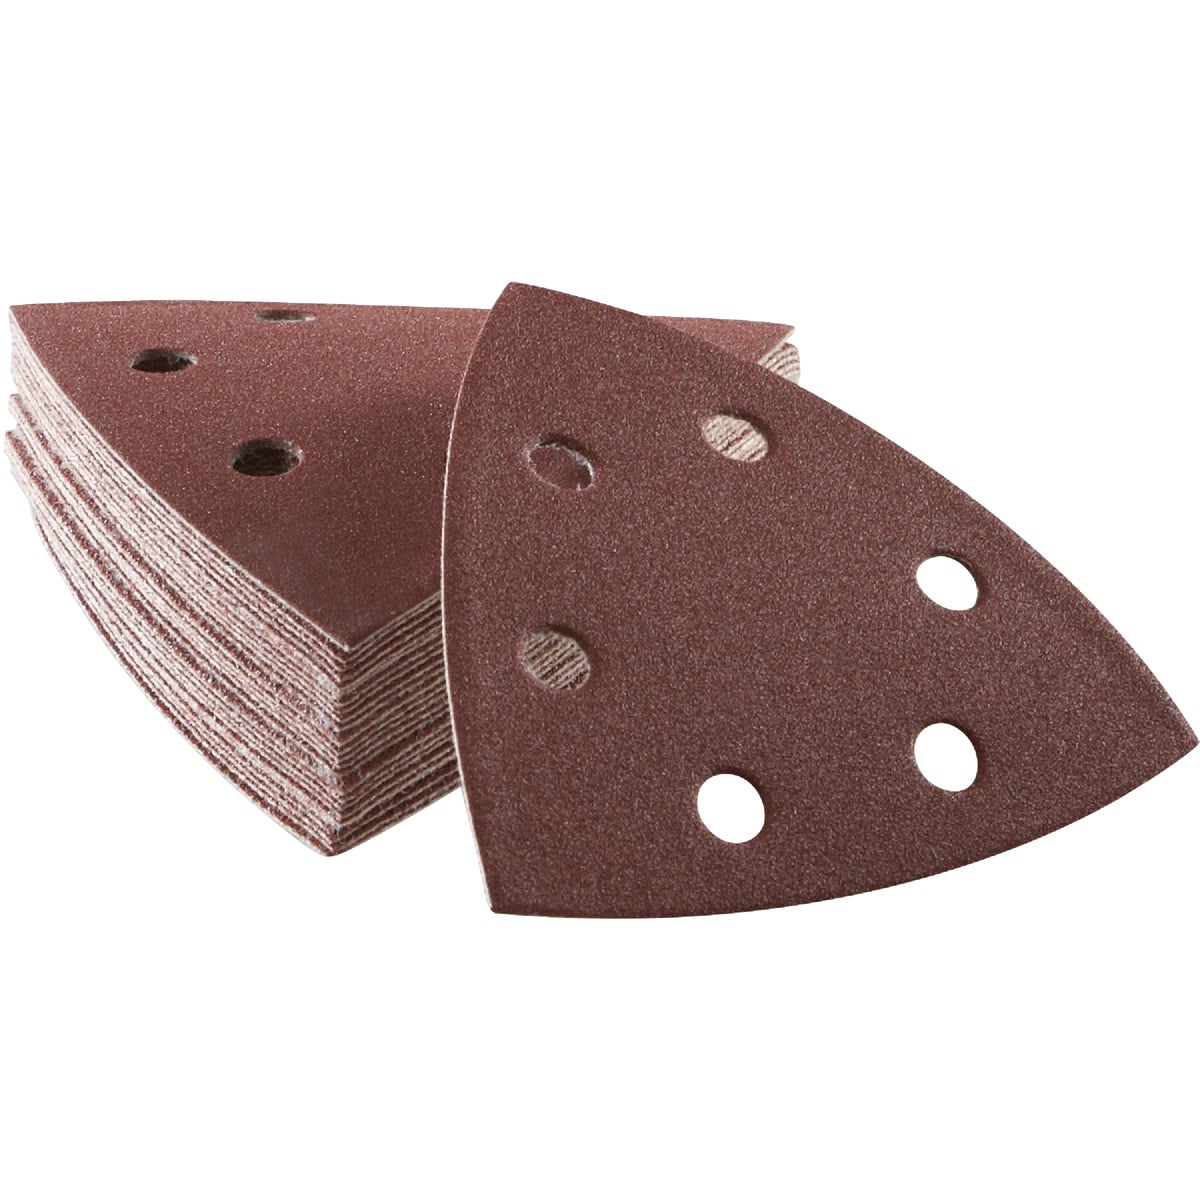 Bosch 180 Grit Triangle Sandpaper (5-Pack)